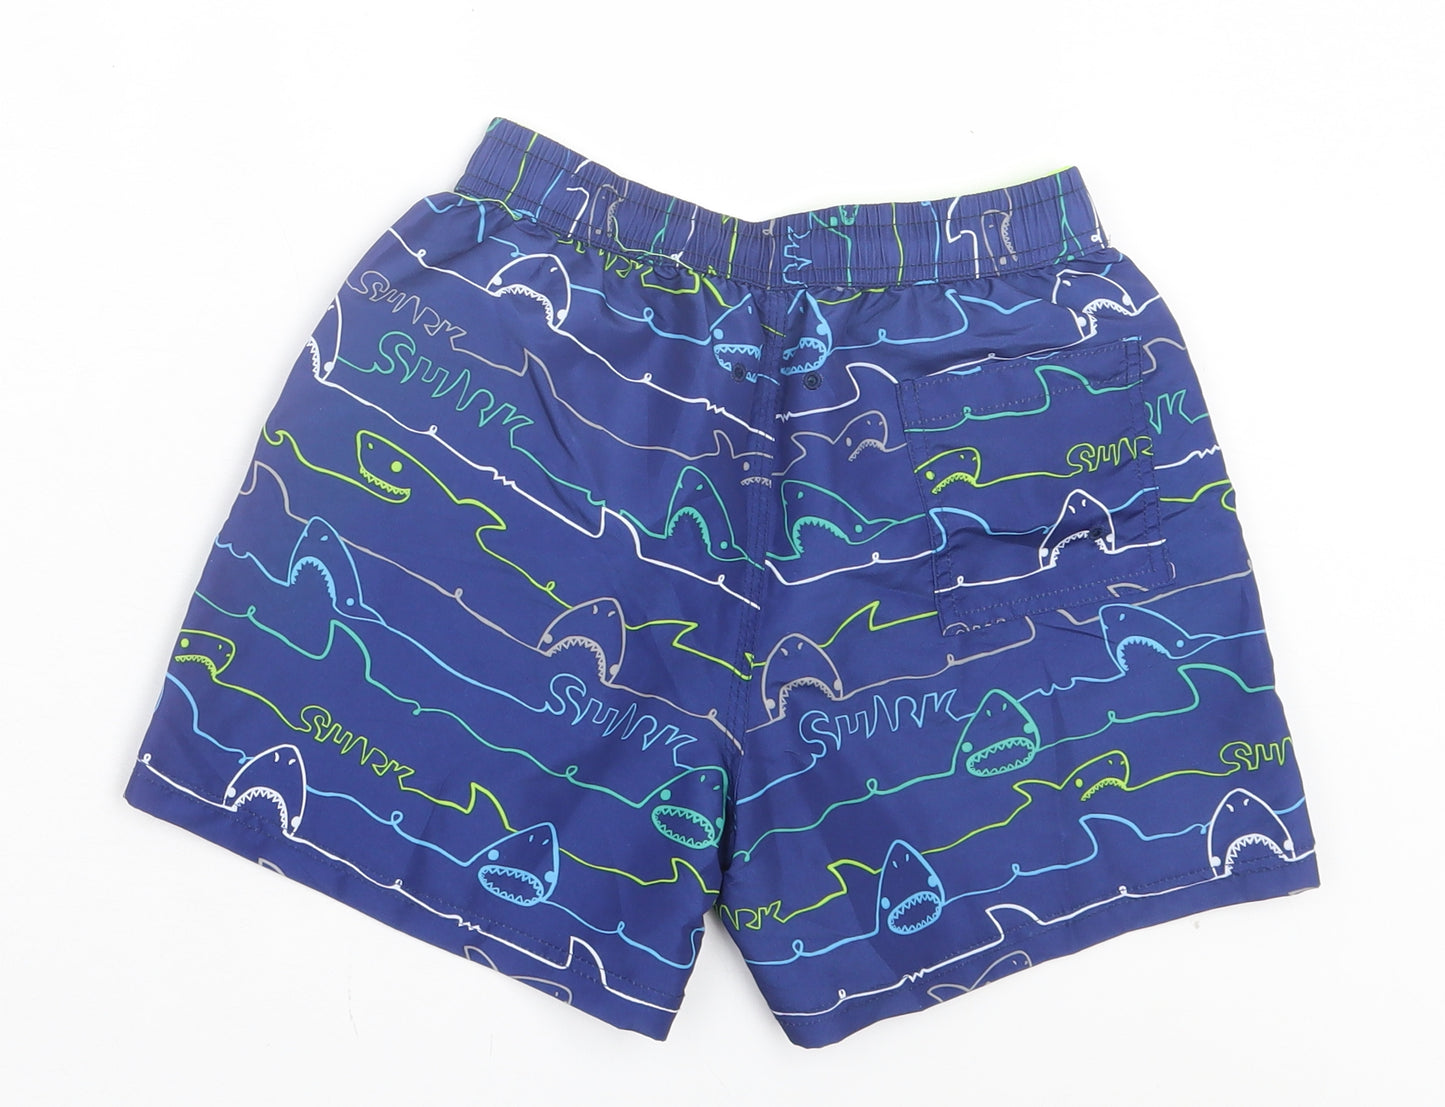 Speedy Shark Boys Blue Geometric Polyester Sweat Shorts Size 10 Years Regular Drawstring - Shark Print